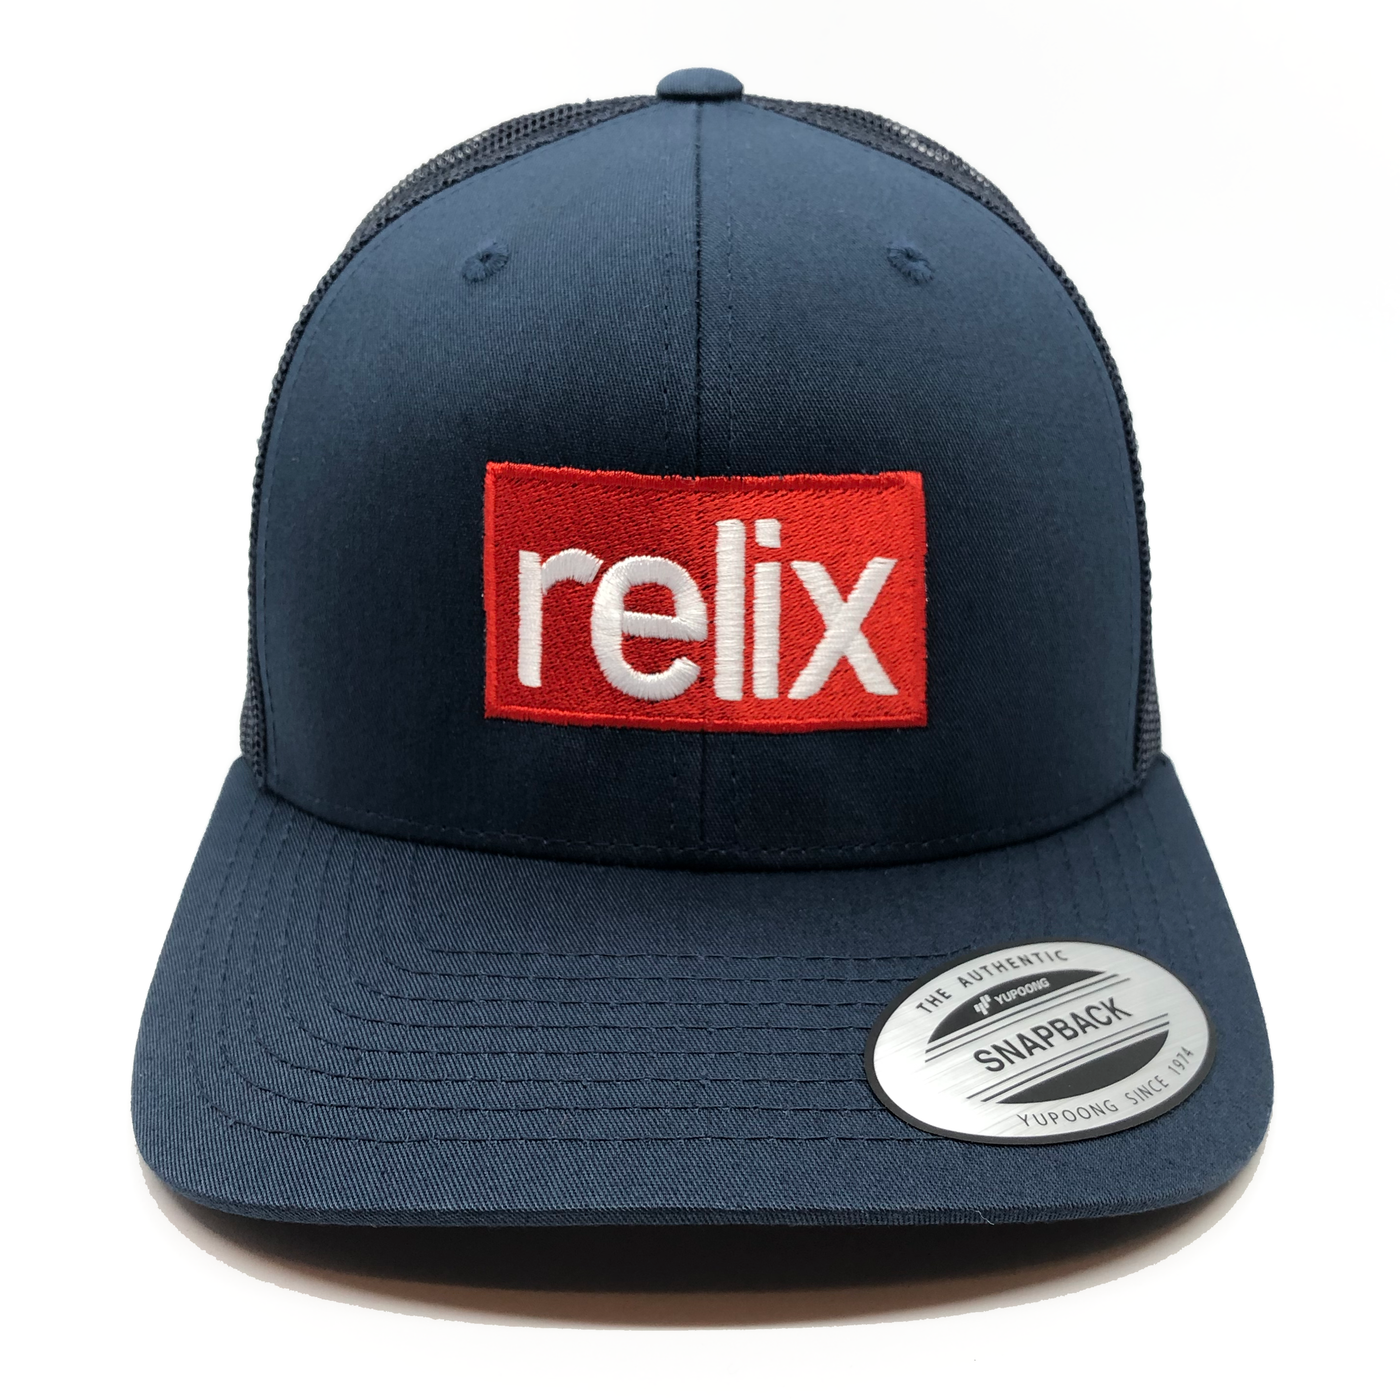 Box Logo hat